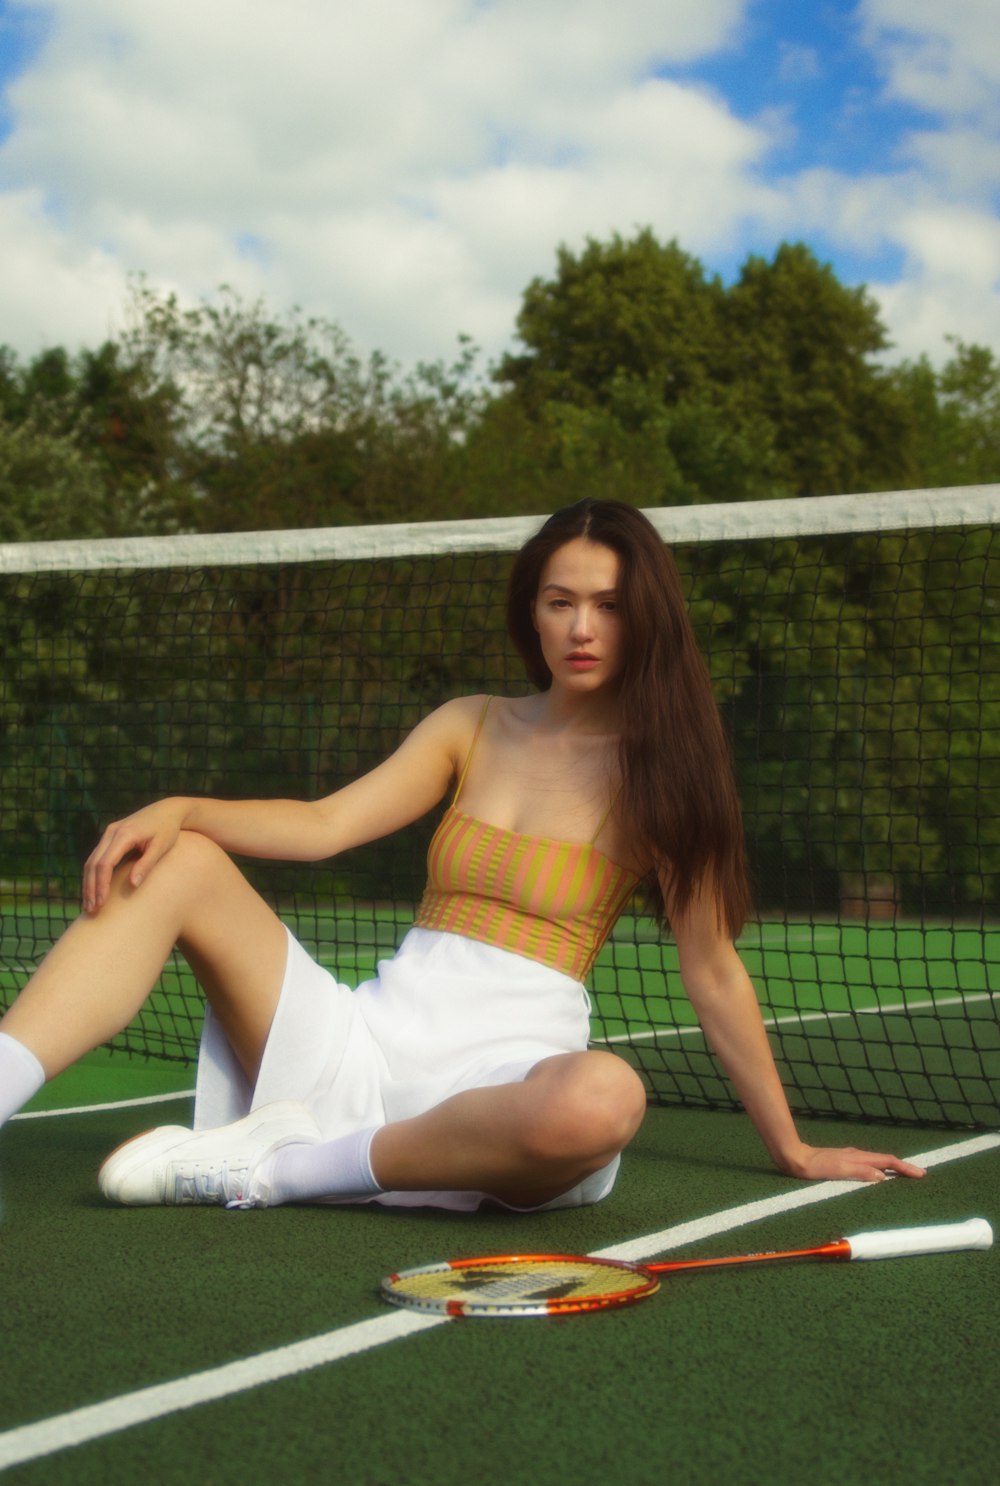 woman in white skirt sitting on tennis net